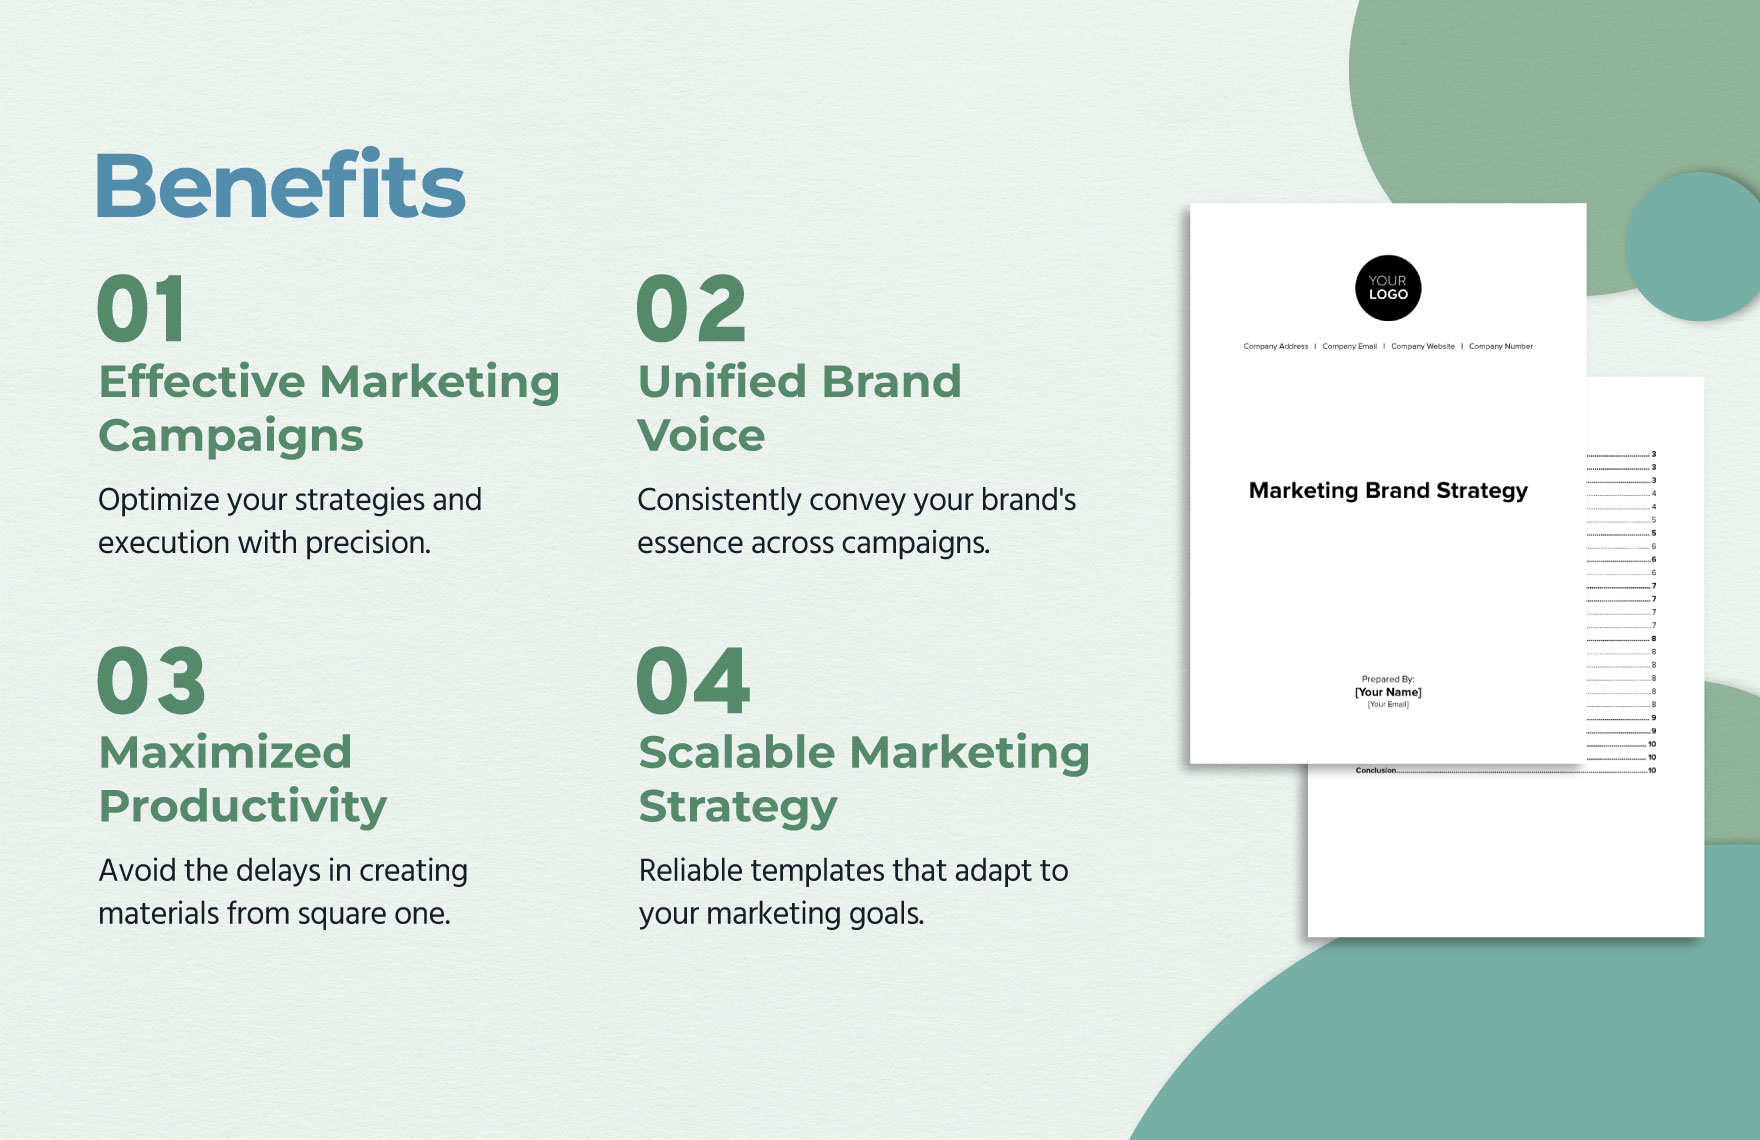 Marketing Brand Strategy Document Template